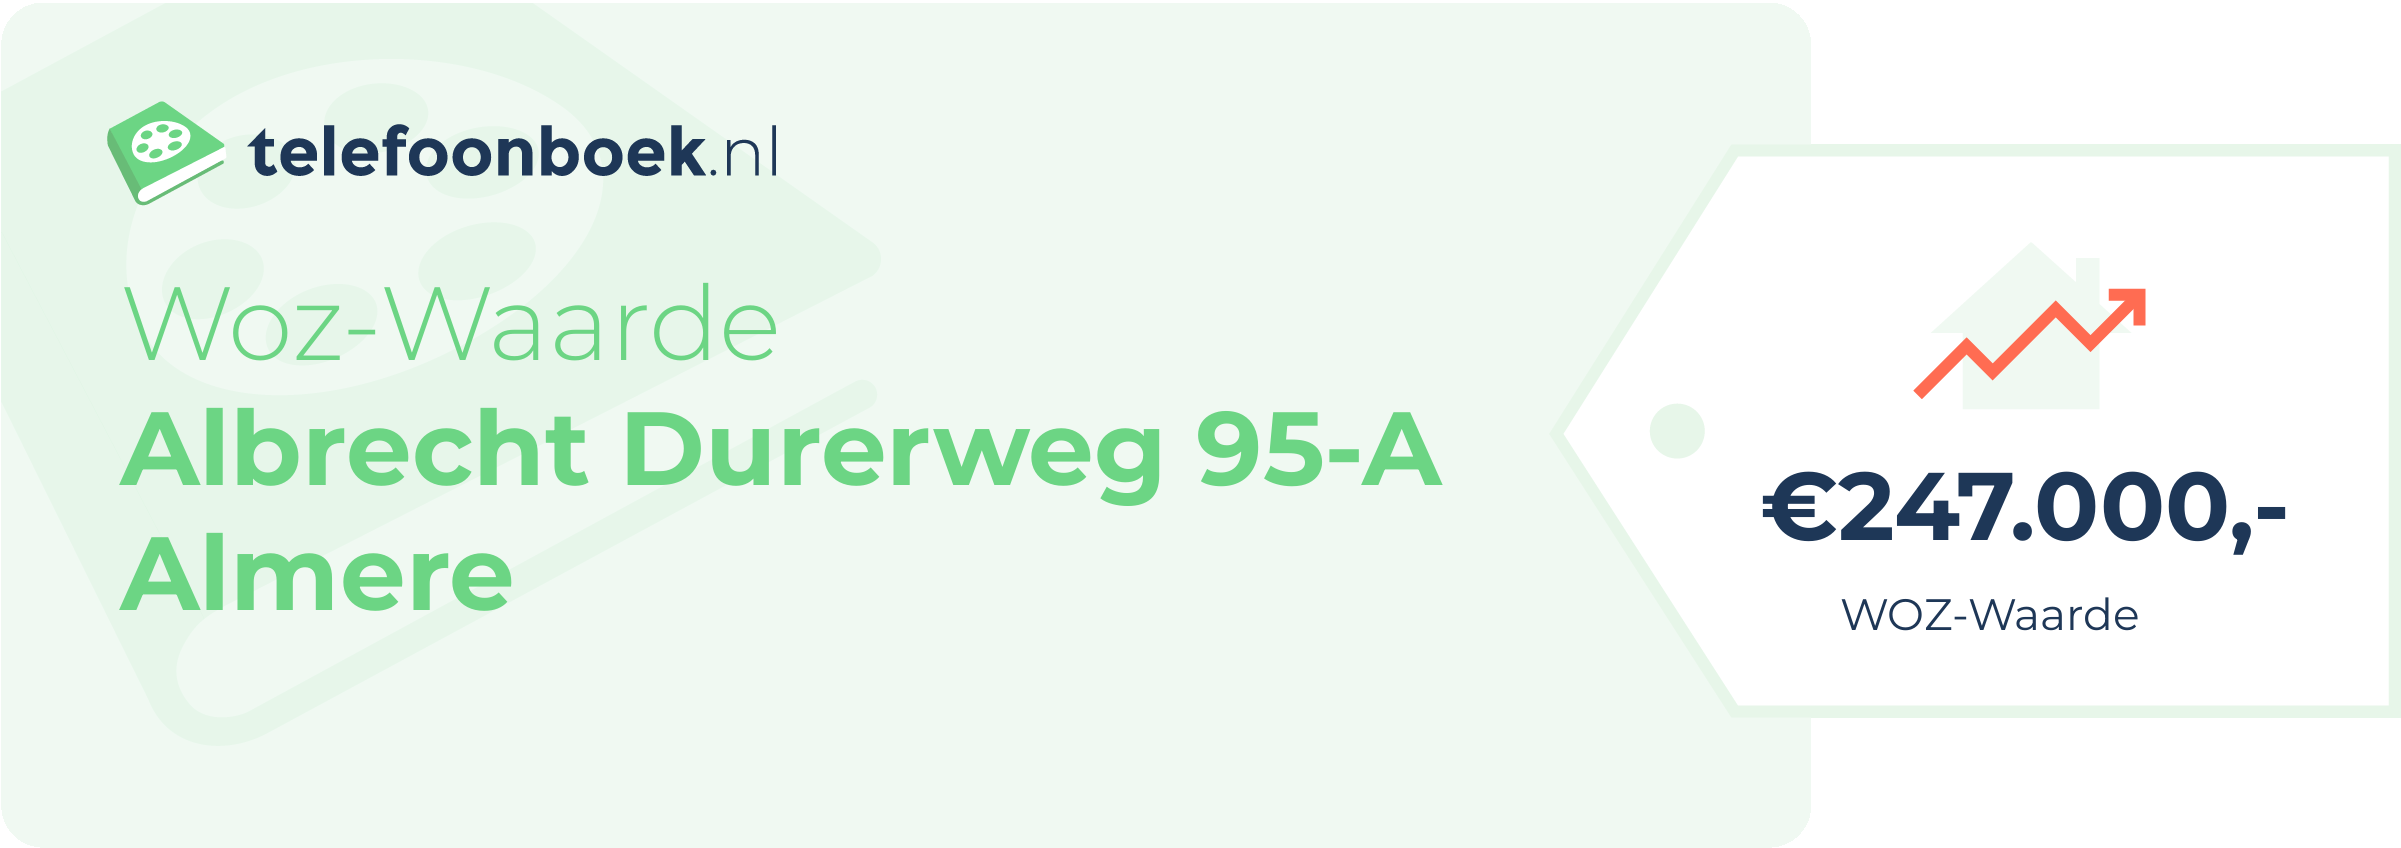 WOZ-waarde Albrecht Durerweg 95-A Almere